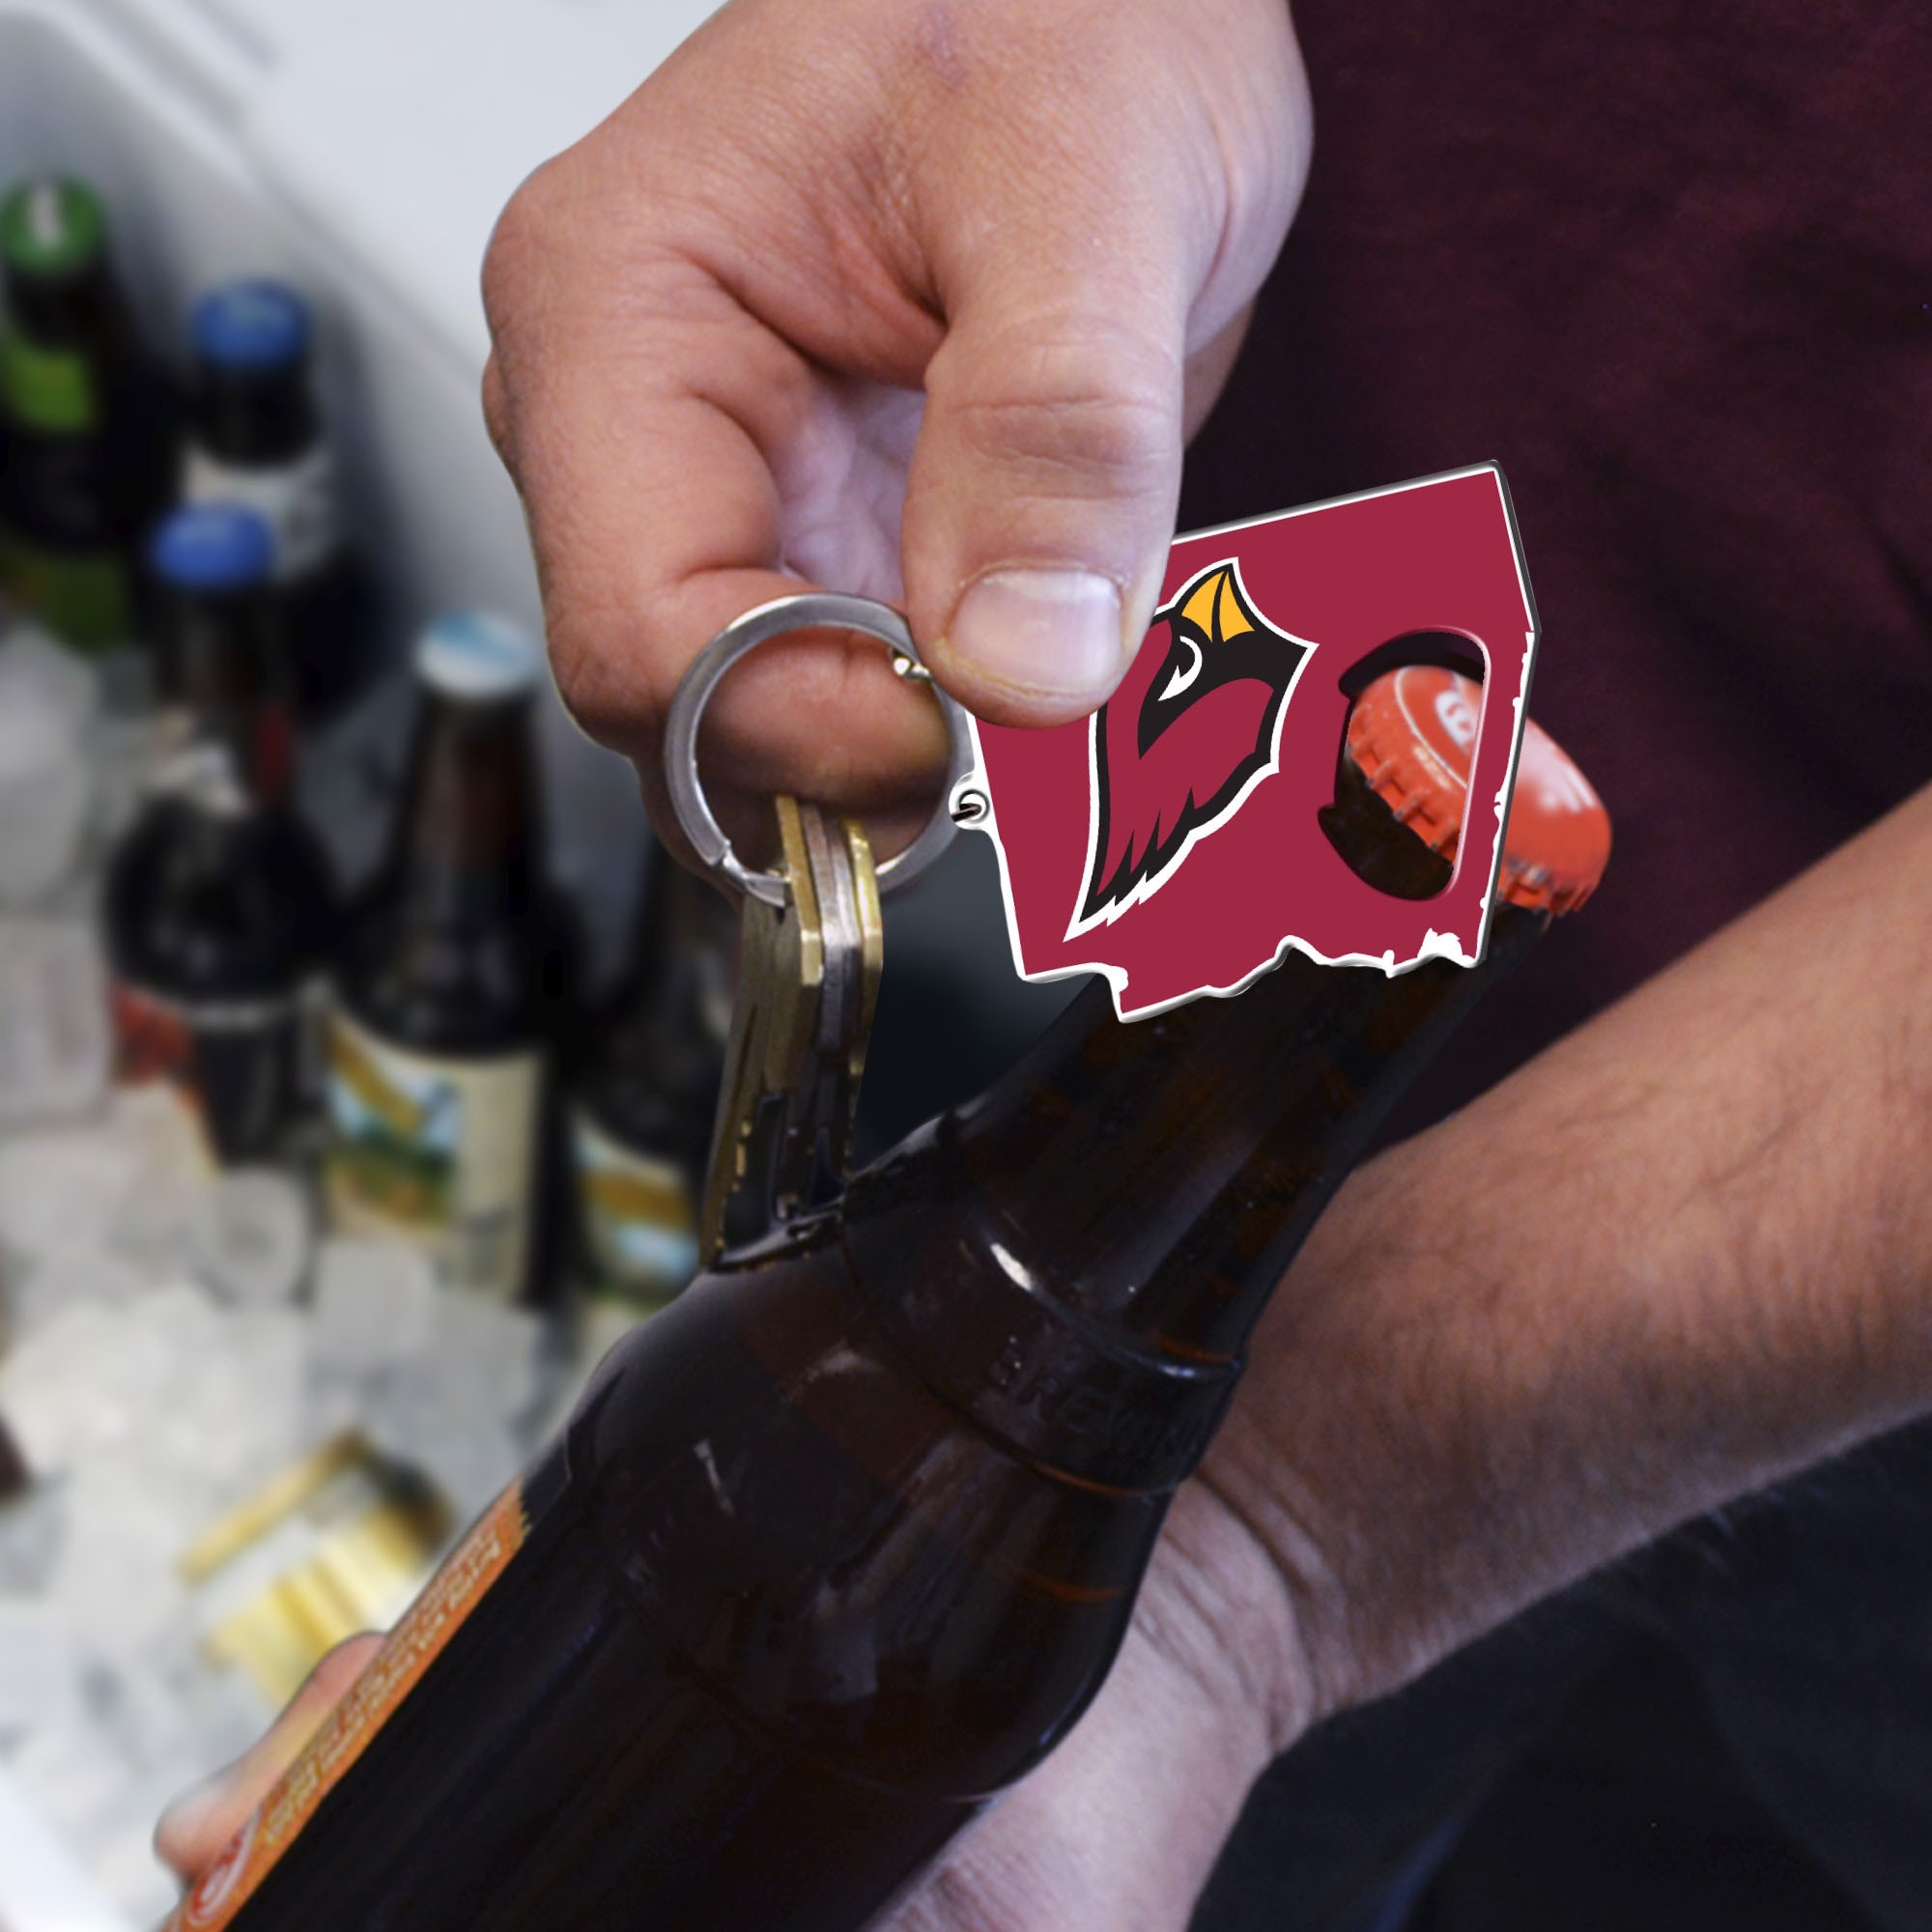 St. Louis Cardinals Key Chain Bottle Opener Keyring